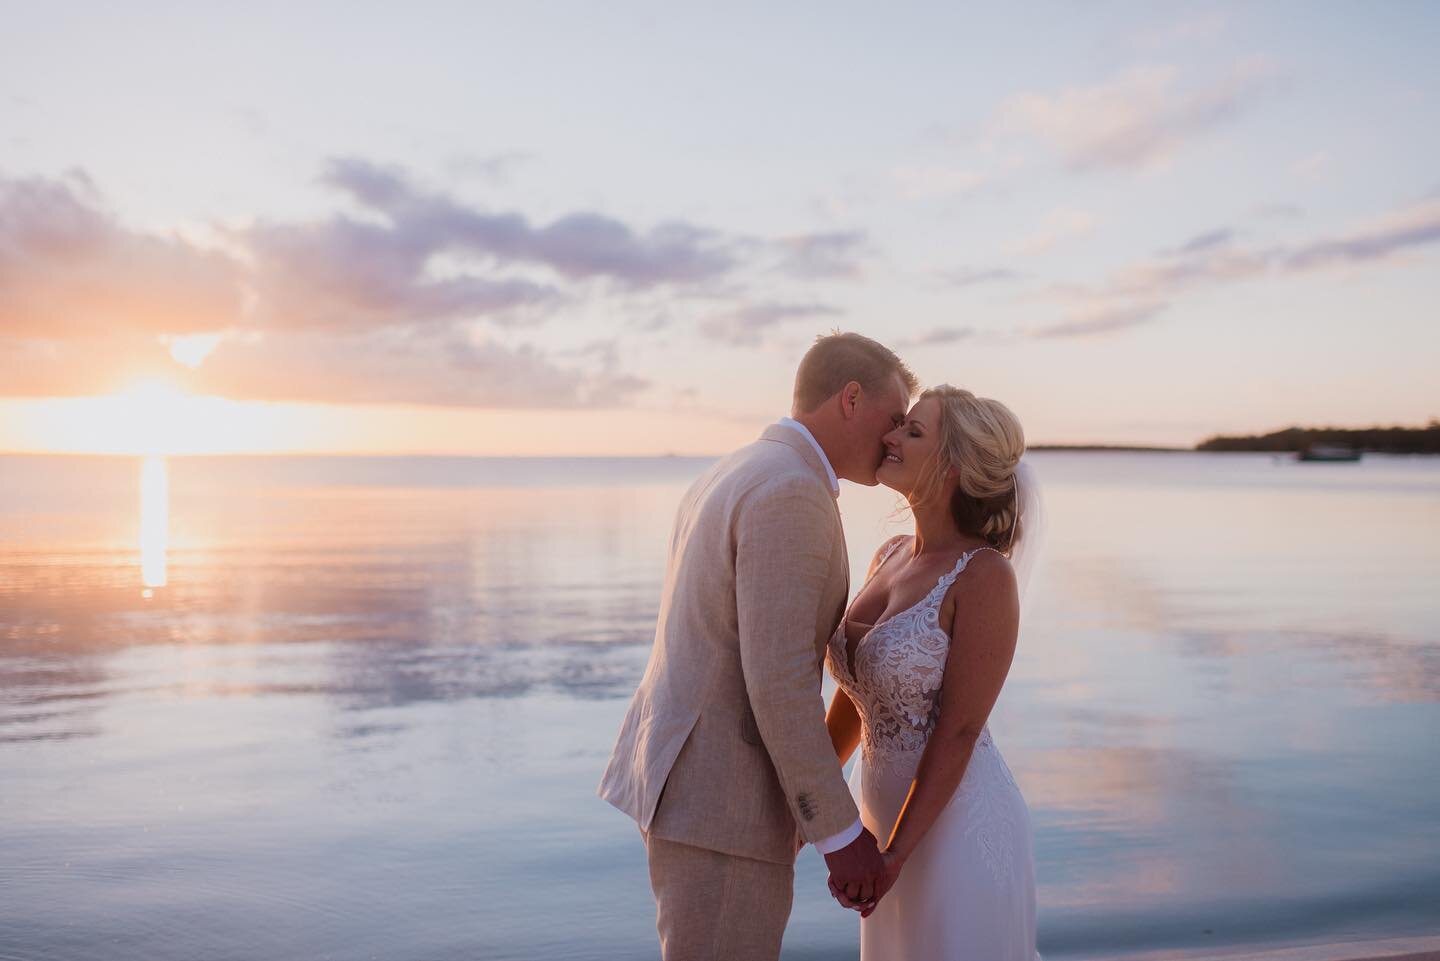 And sometimes you get a peaceful calm sunset! // #weddingsunset #beachwedding #islandwedding #abacoweddingphotography